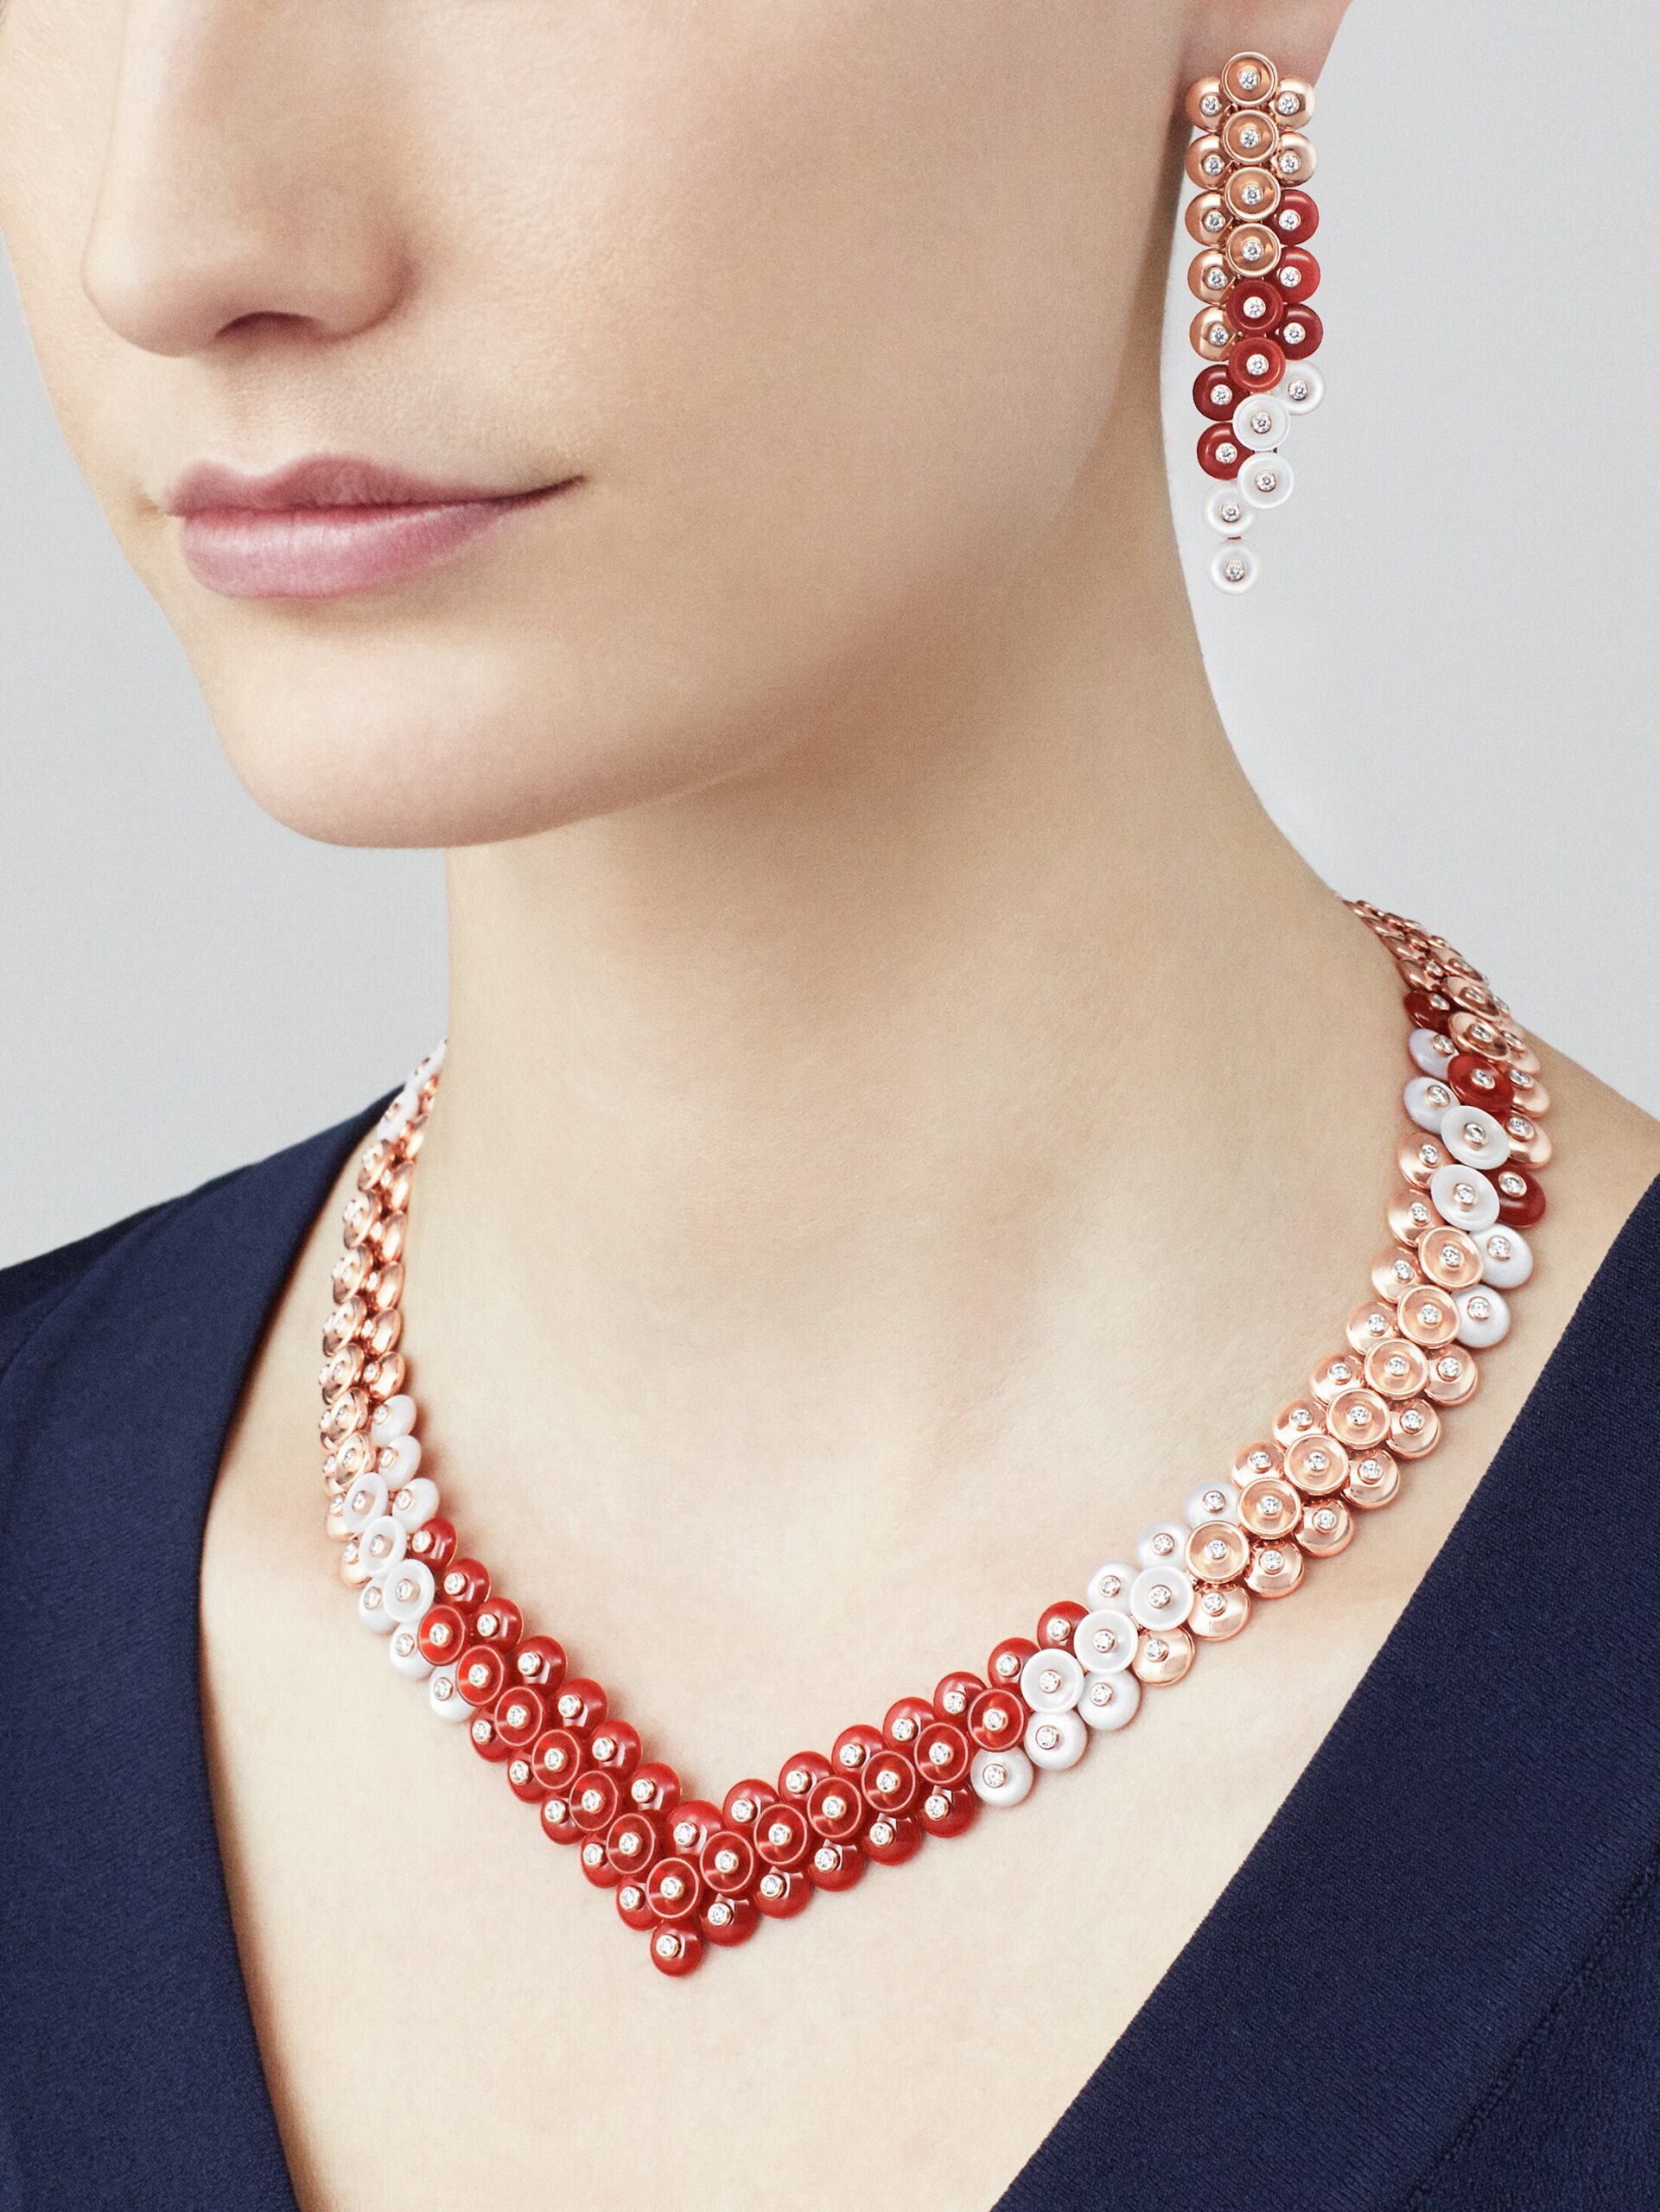 vcaro7gi00-jewelry-bouton-d-or-necklace-worn-alternative-rose-go